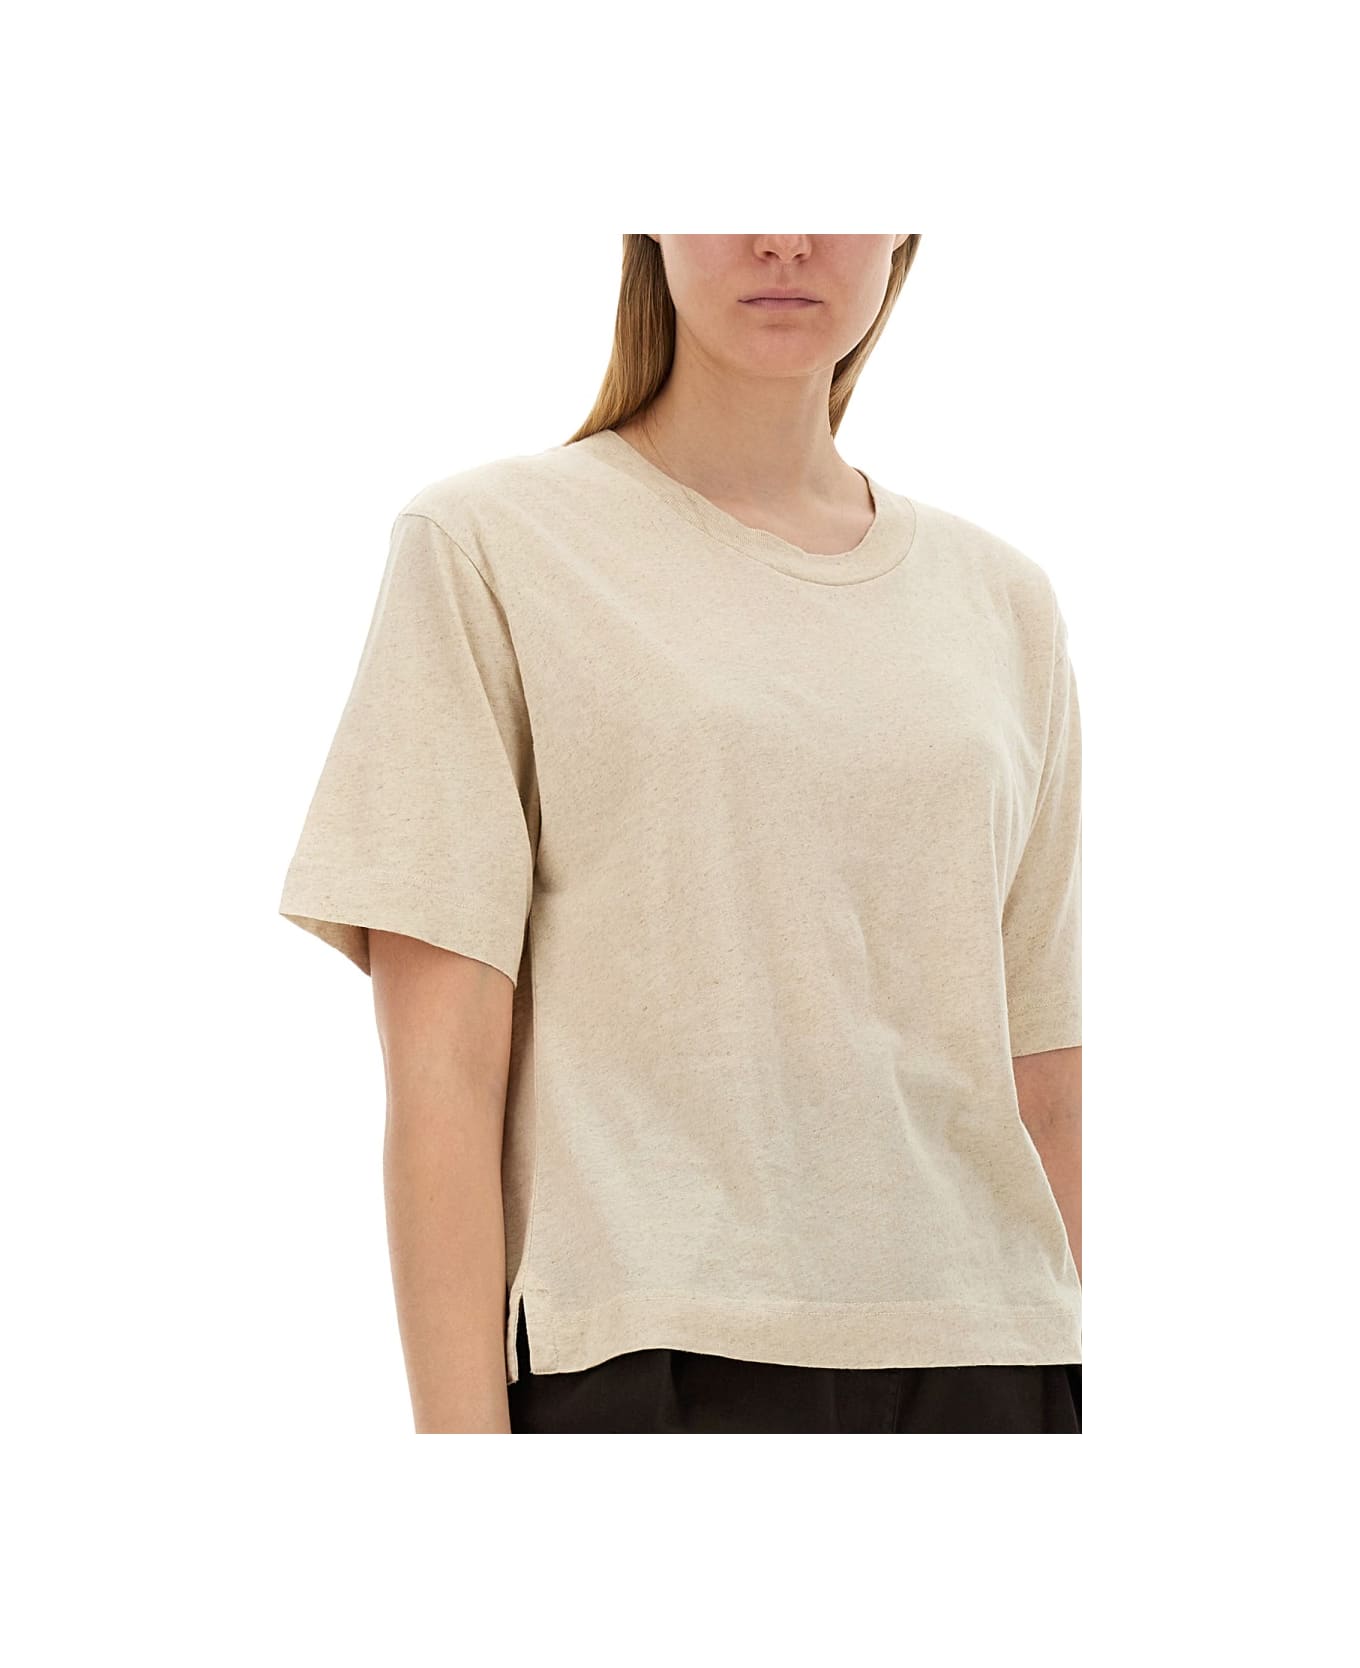 Margaret Howell Simple T-shirt - BEIGE